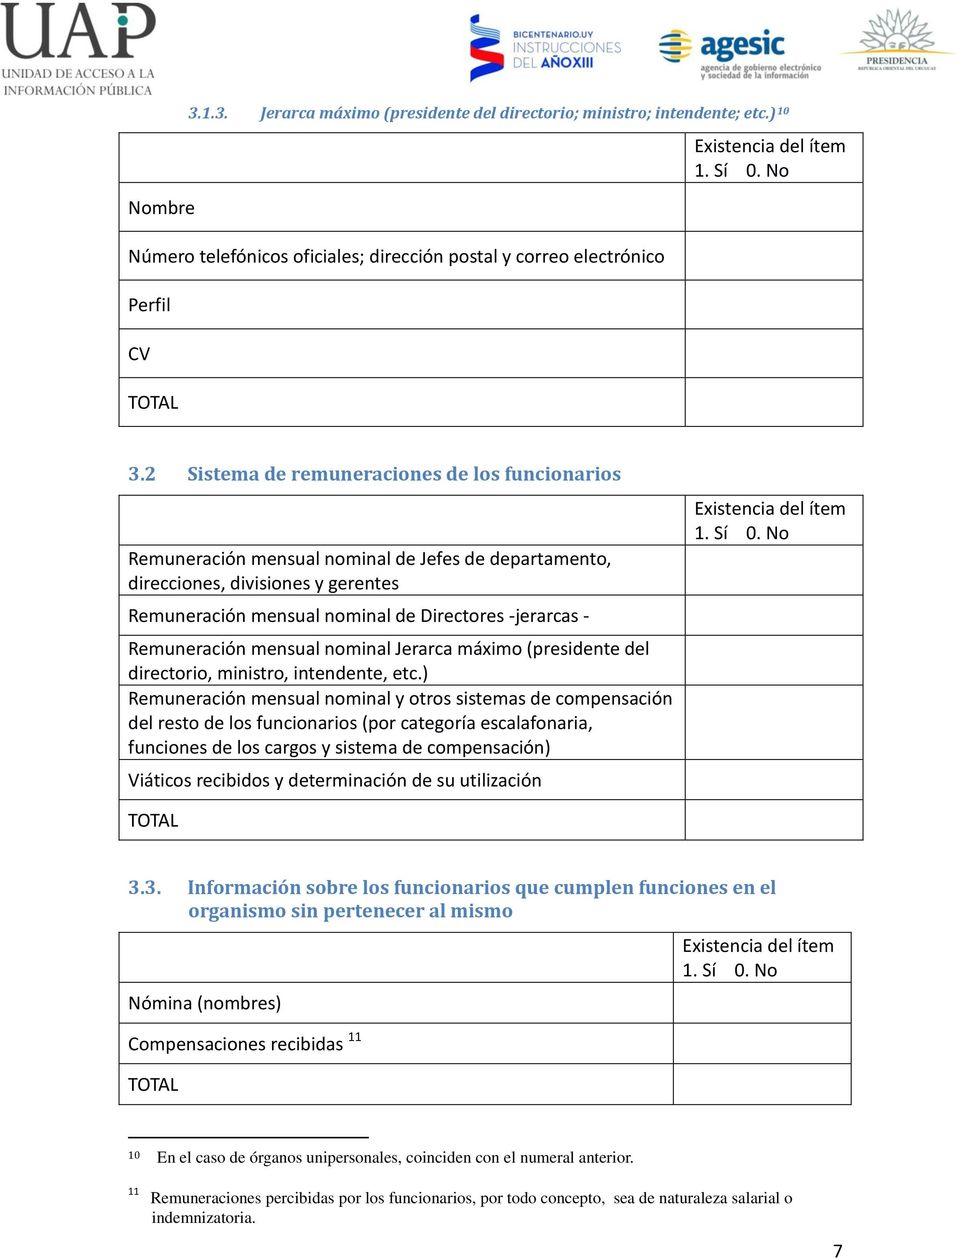 Remuneración mensual nominal Jerarca máximo (presidente del directorio, ministro, intendente, etc.